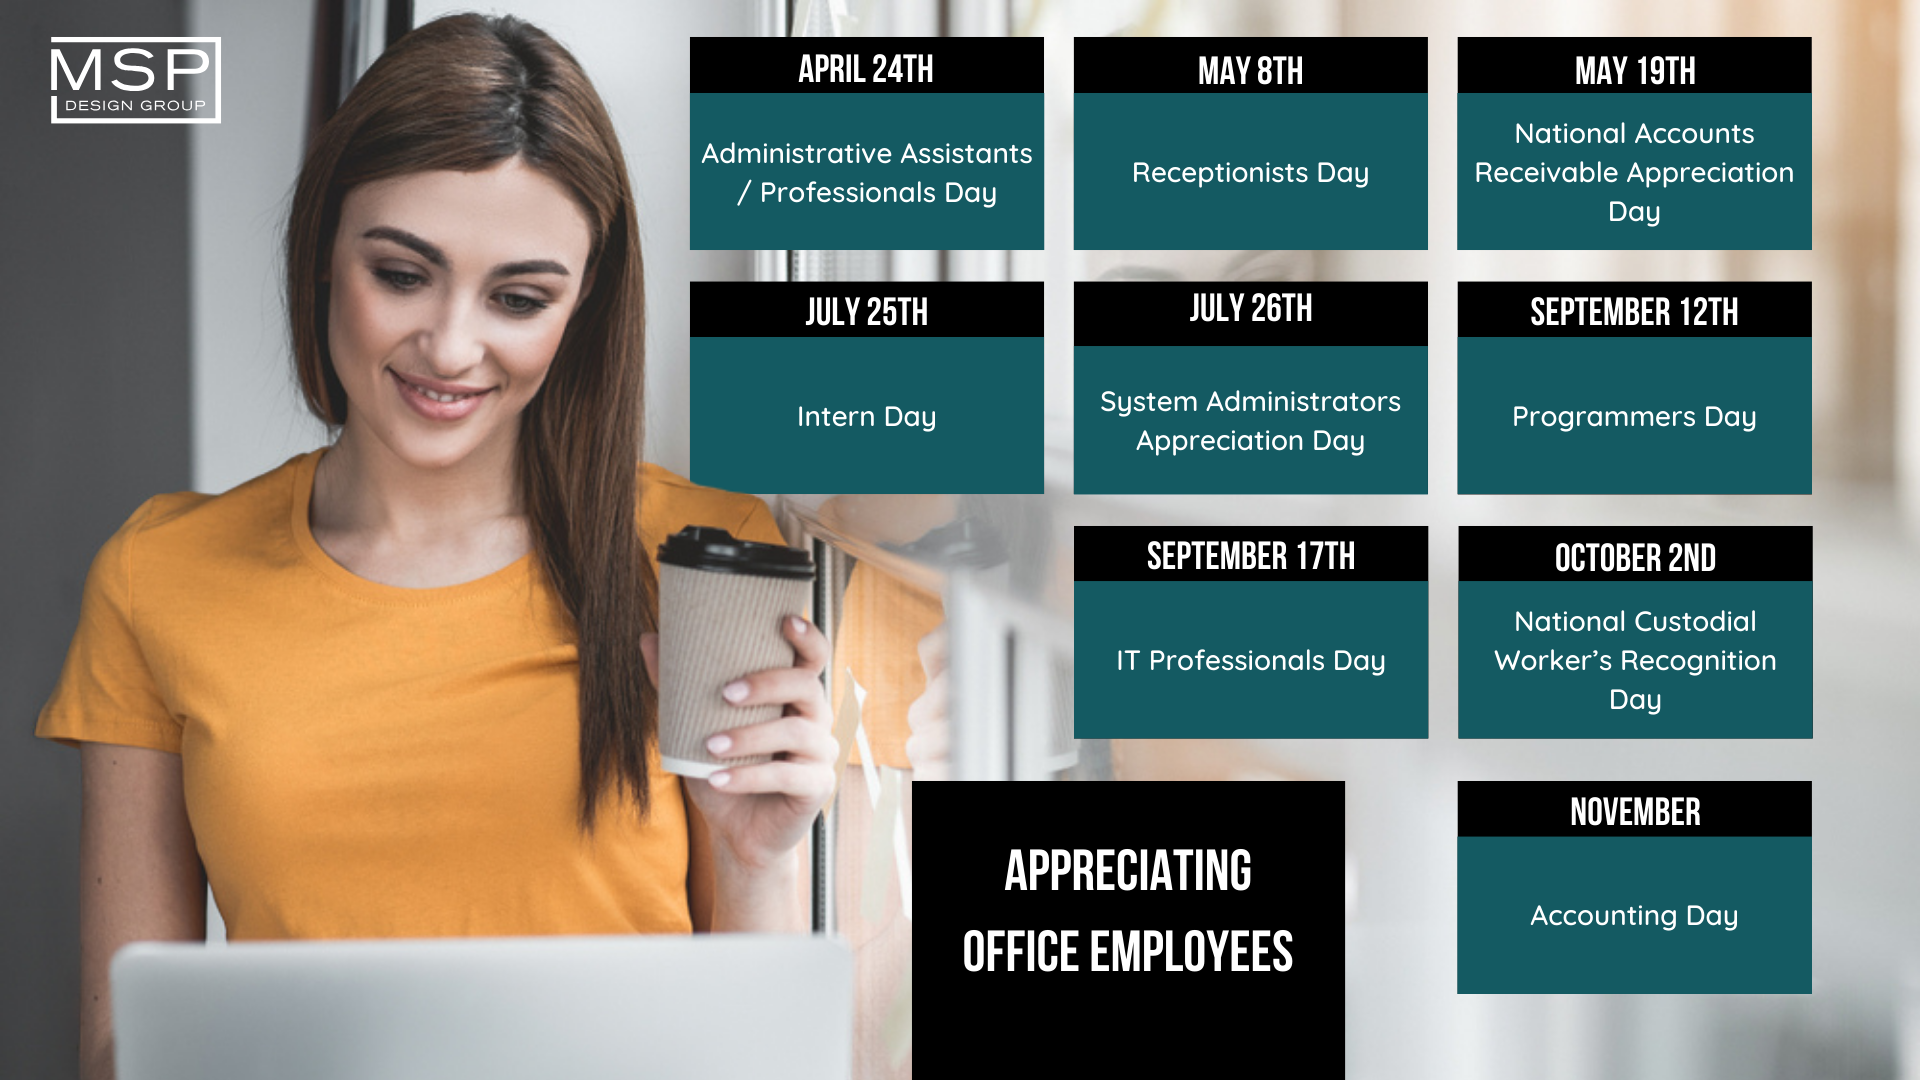 Employee Appreciation Calendar - Office Employees